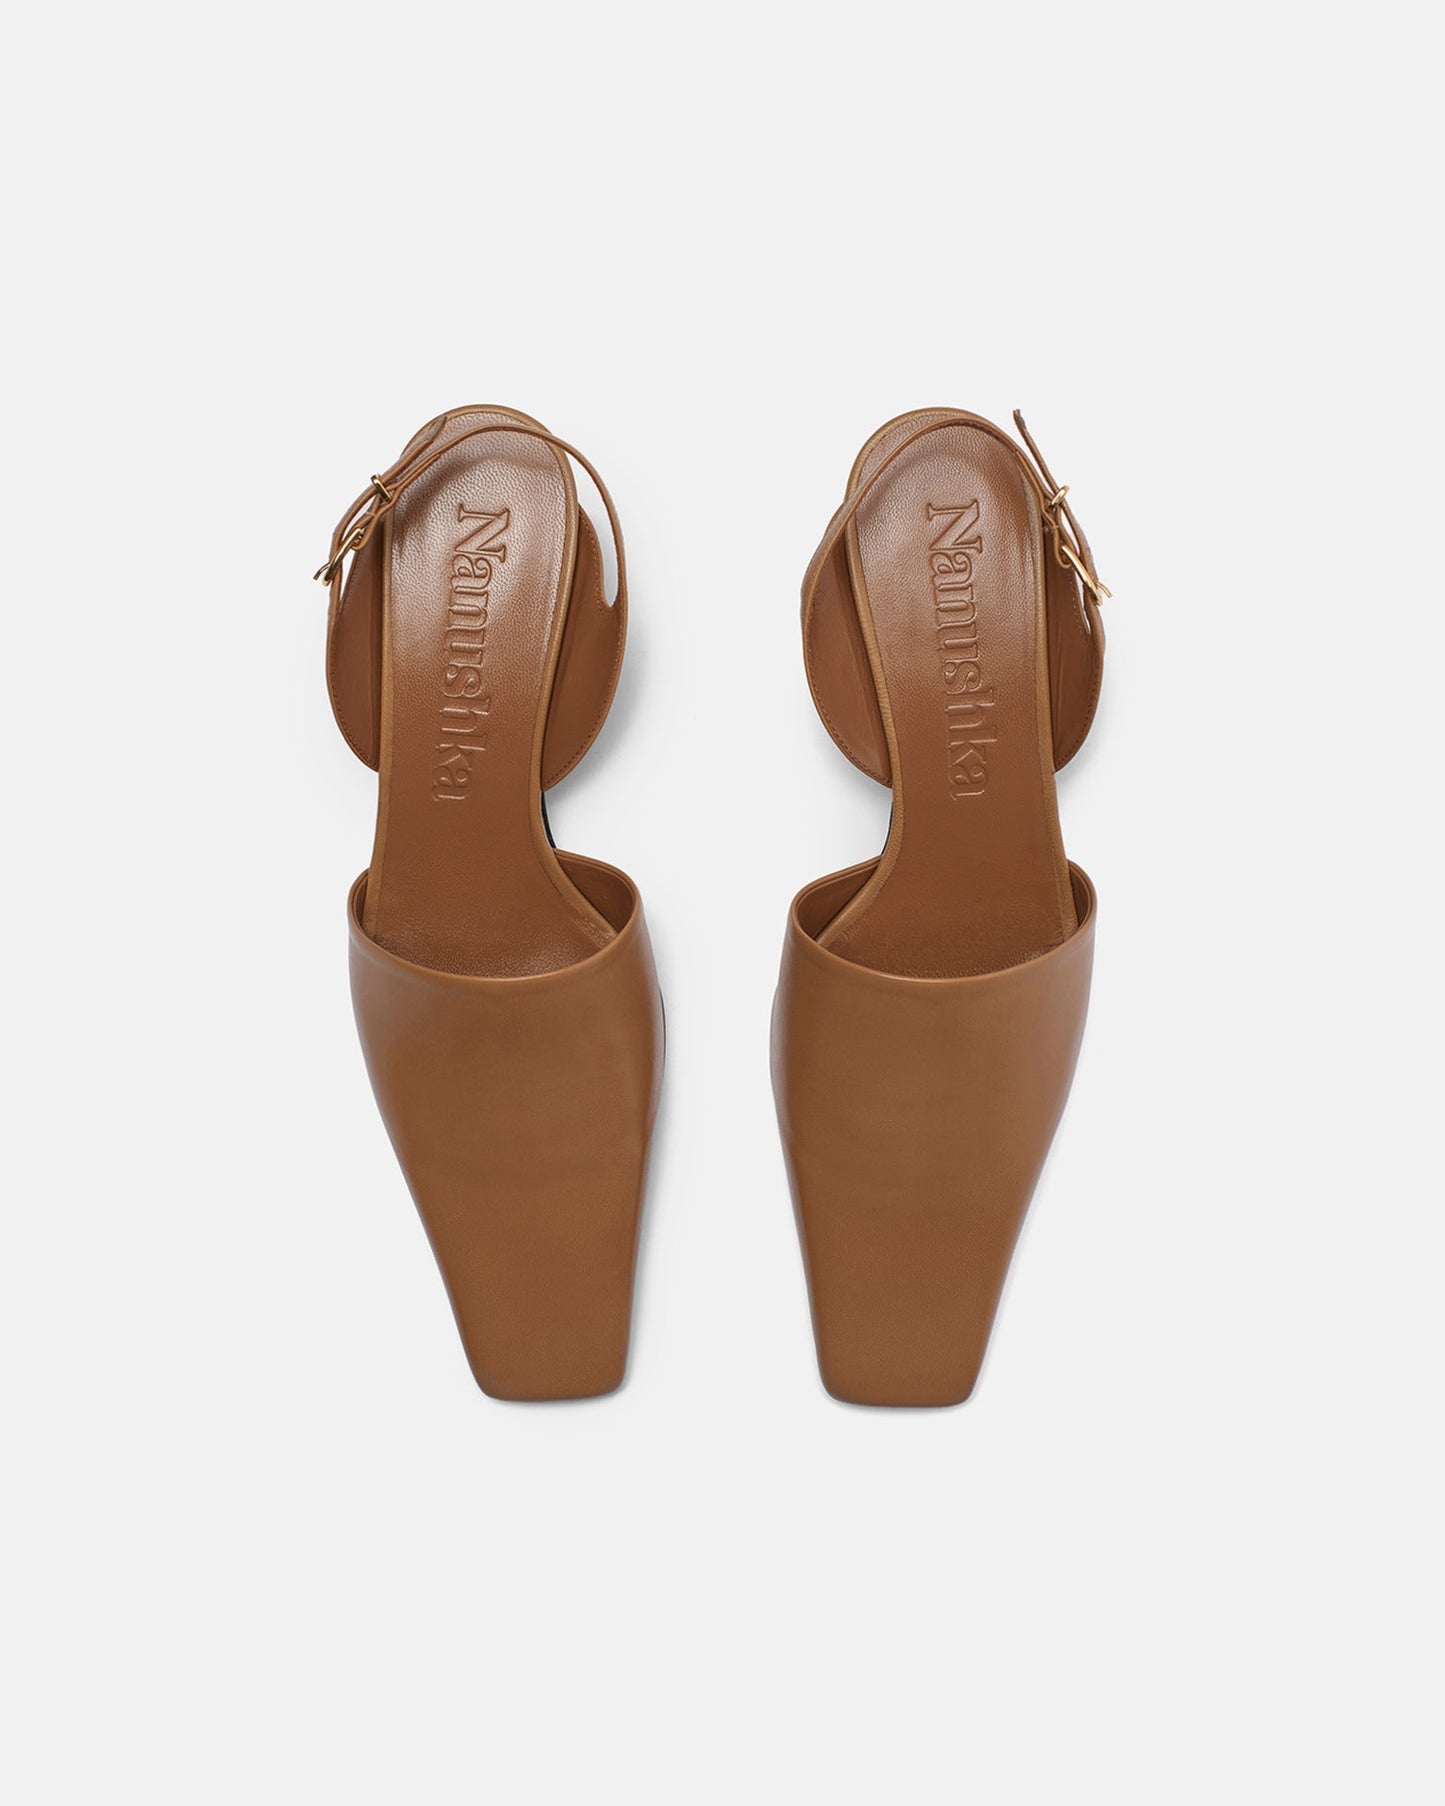 Enaji - Leather Sandals - Nut Brown